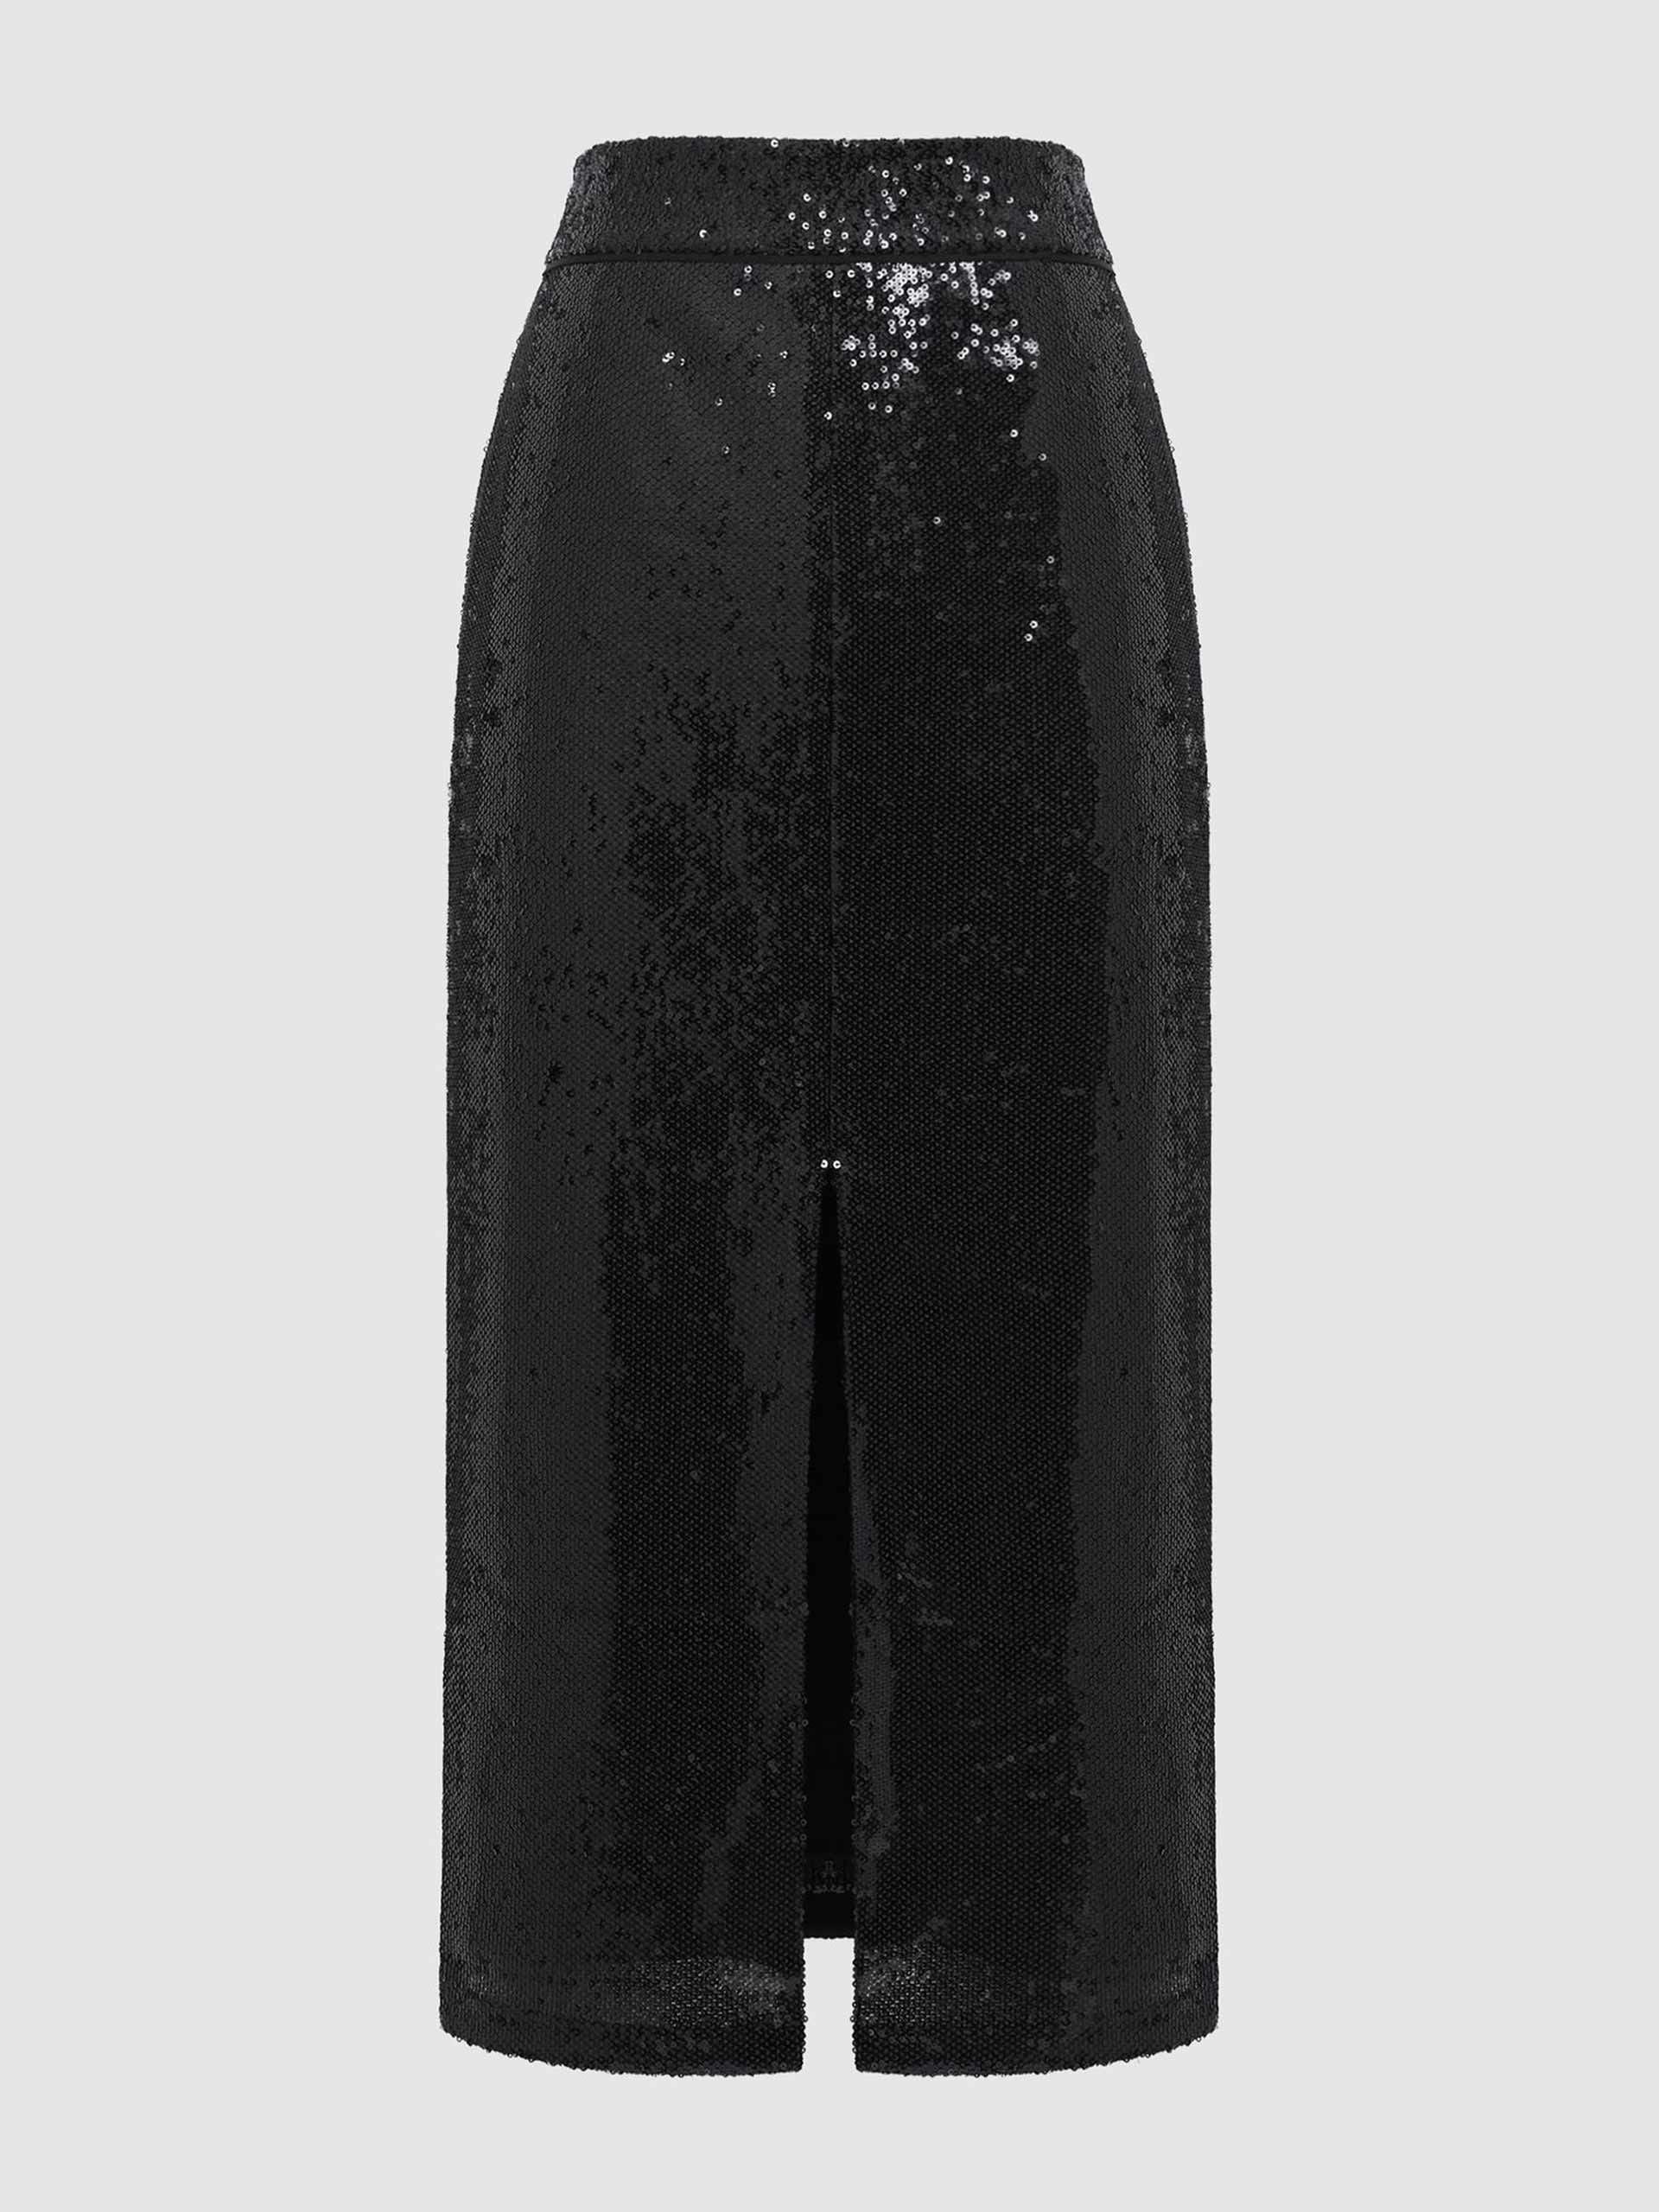 Sequin pencil skirt